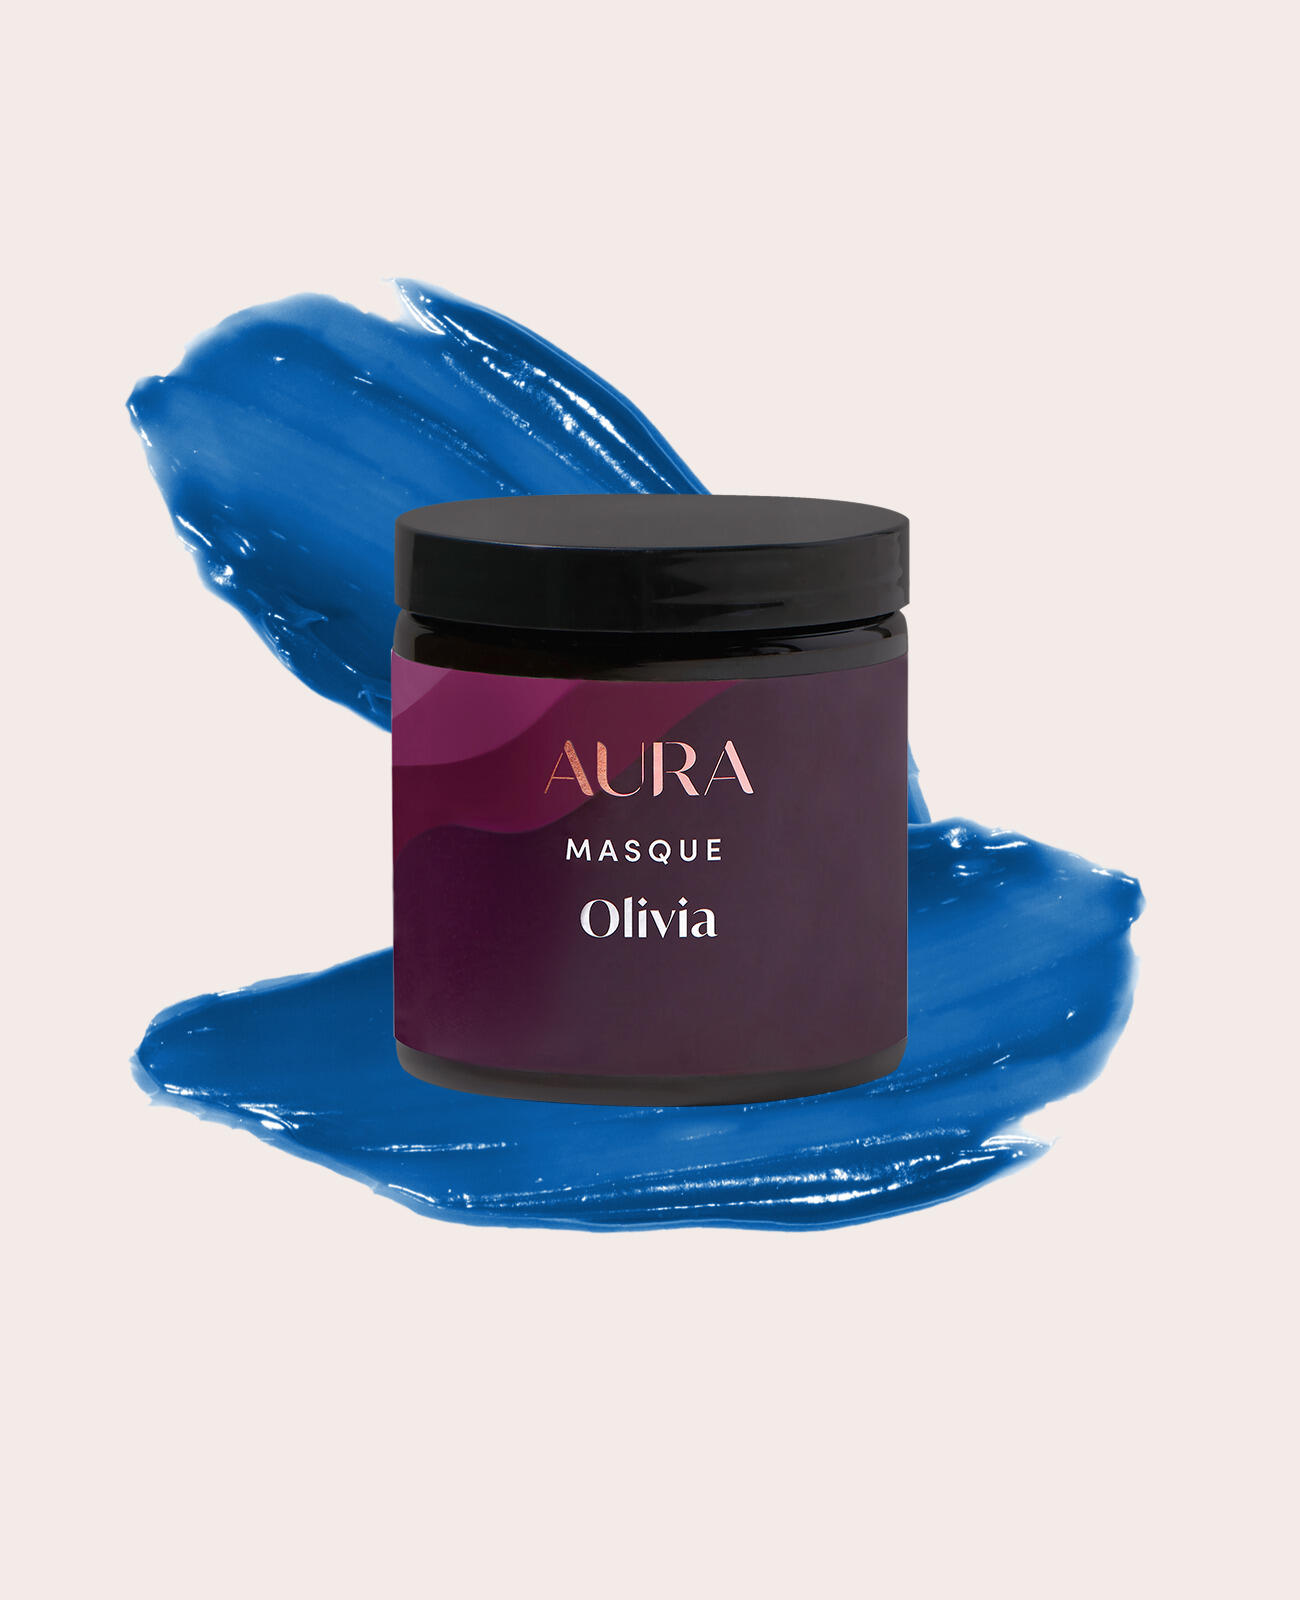 AURA personalized hair mask with california indigo pigment